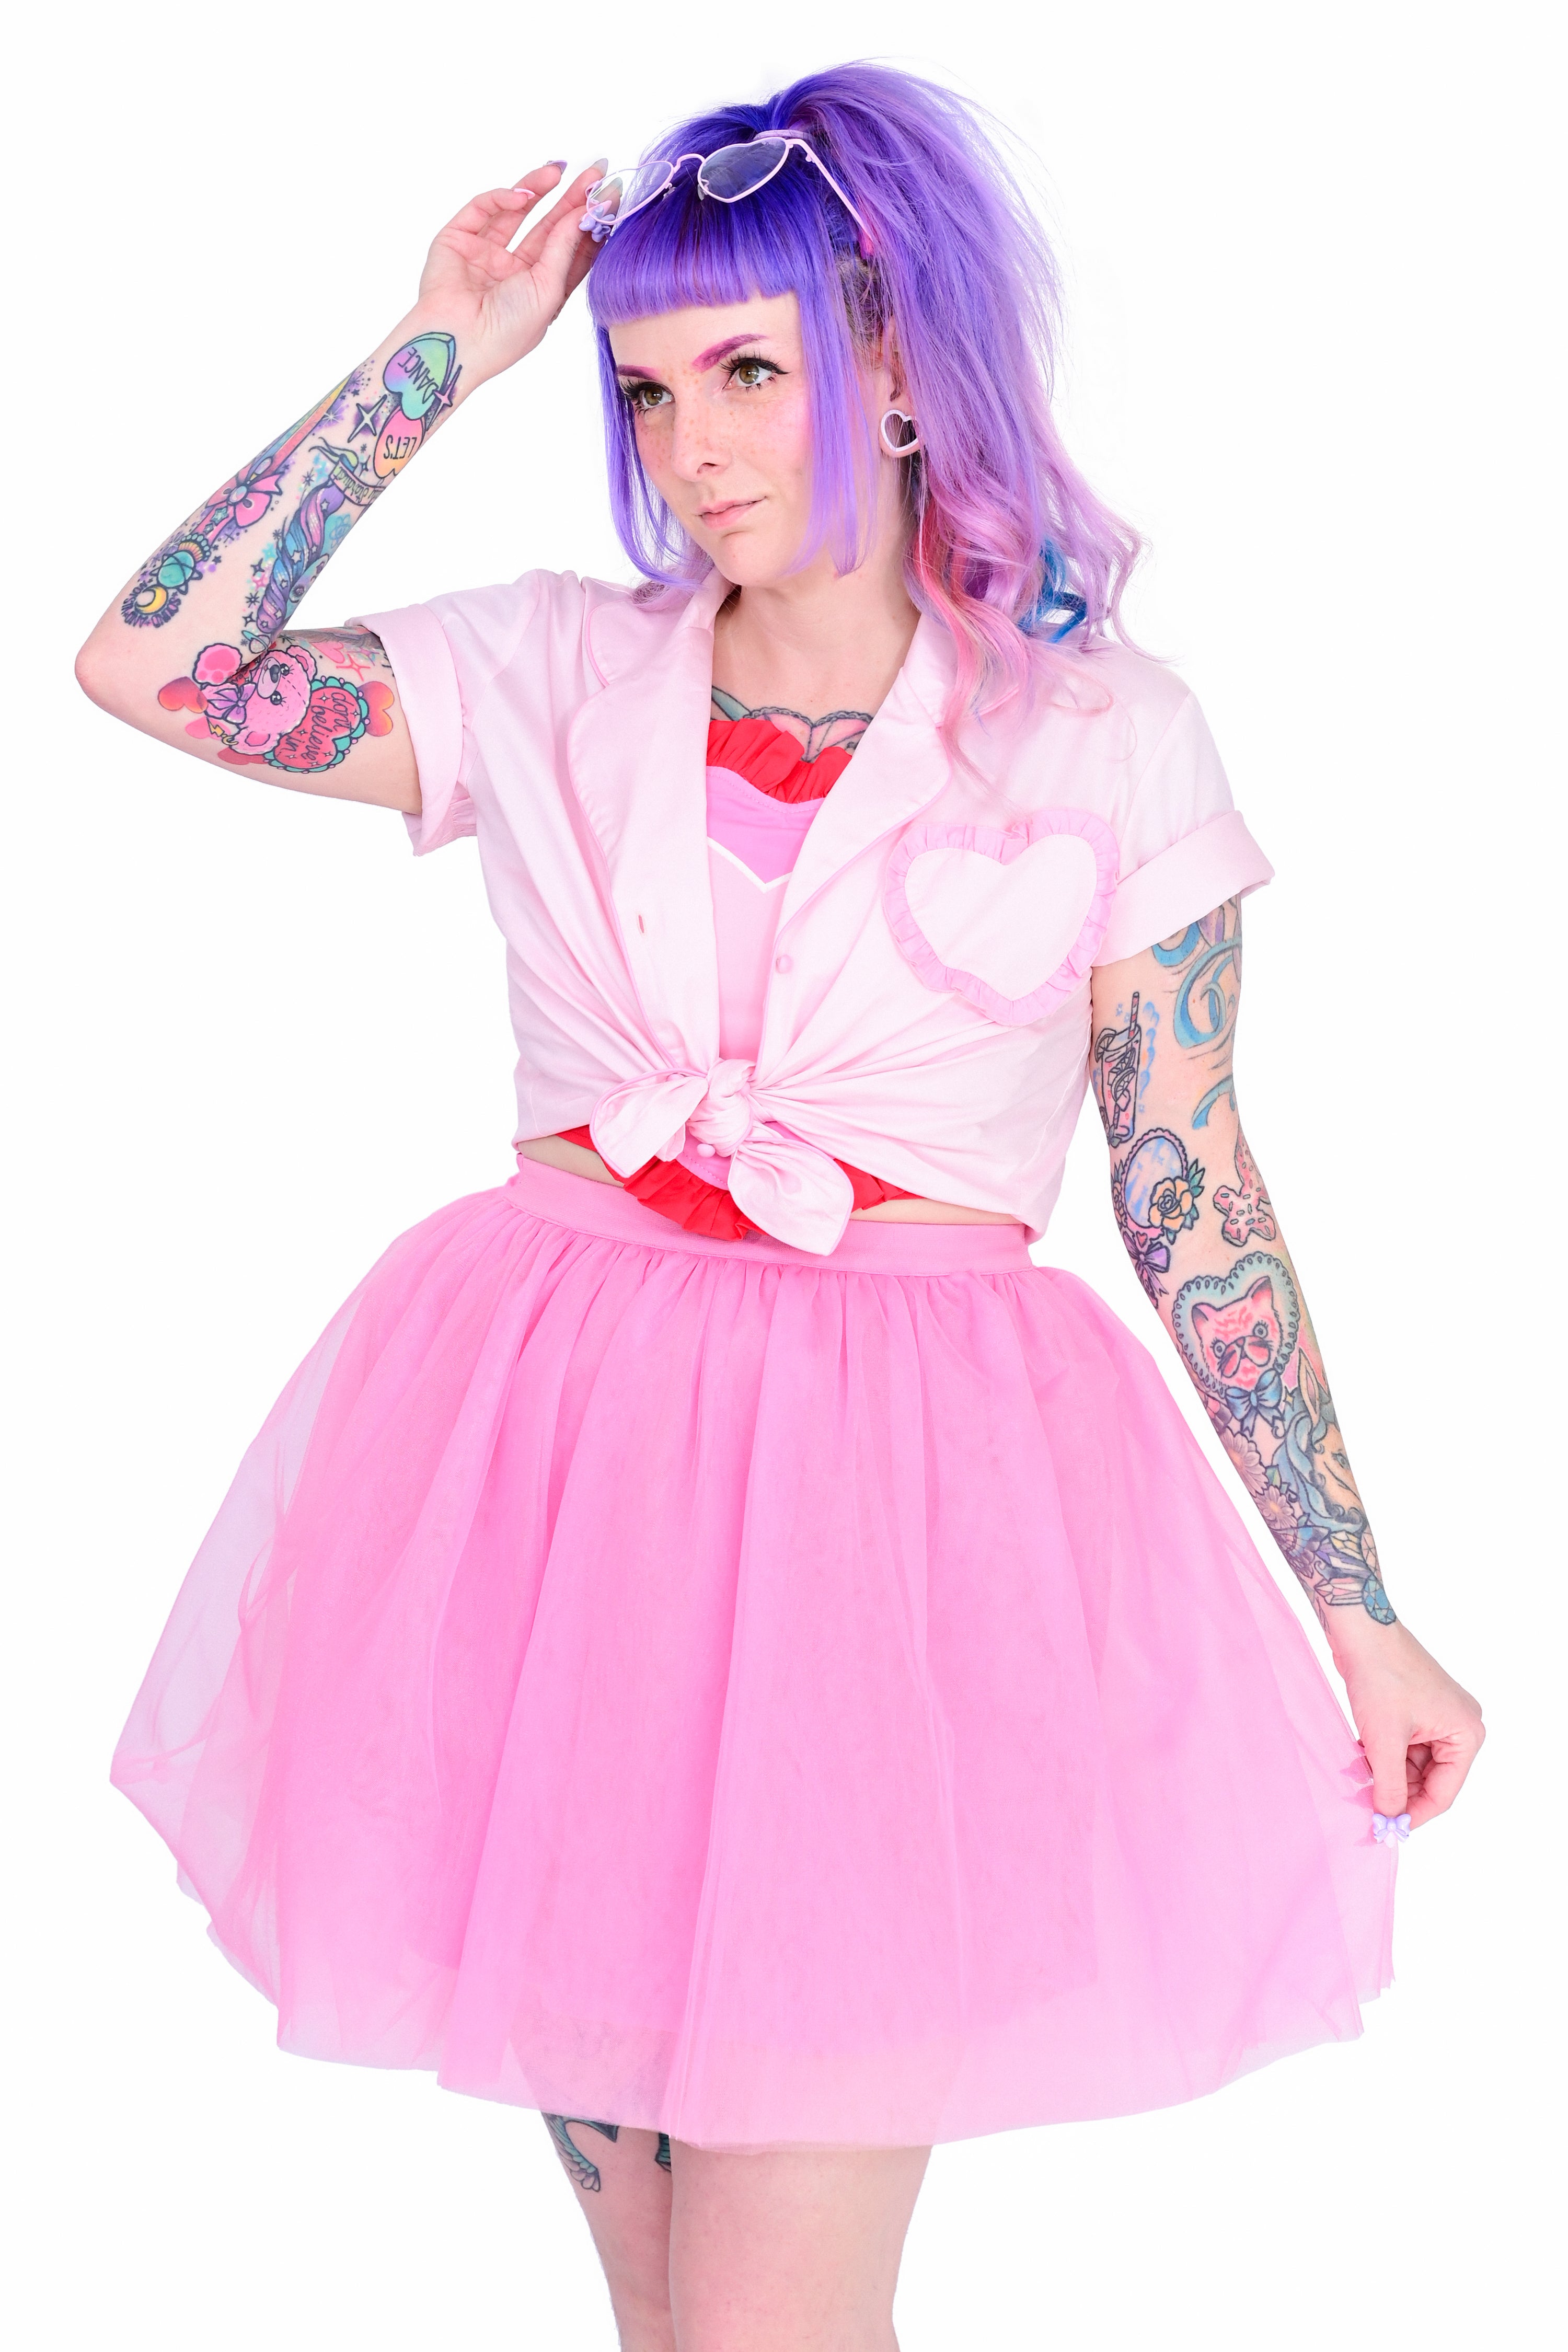 Laurel Pink Tulle Skirt - XS-XL left!